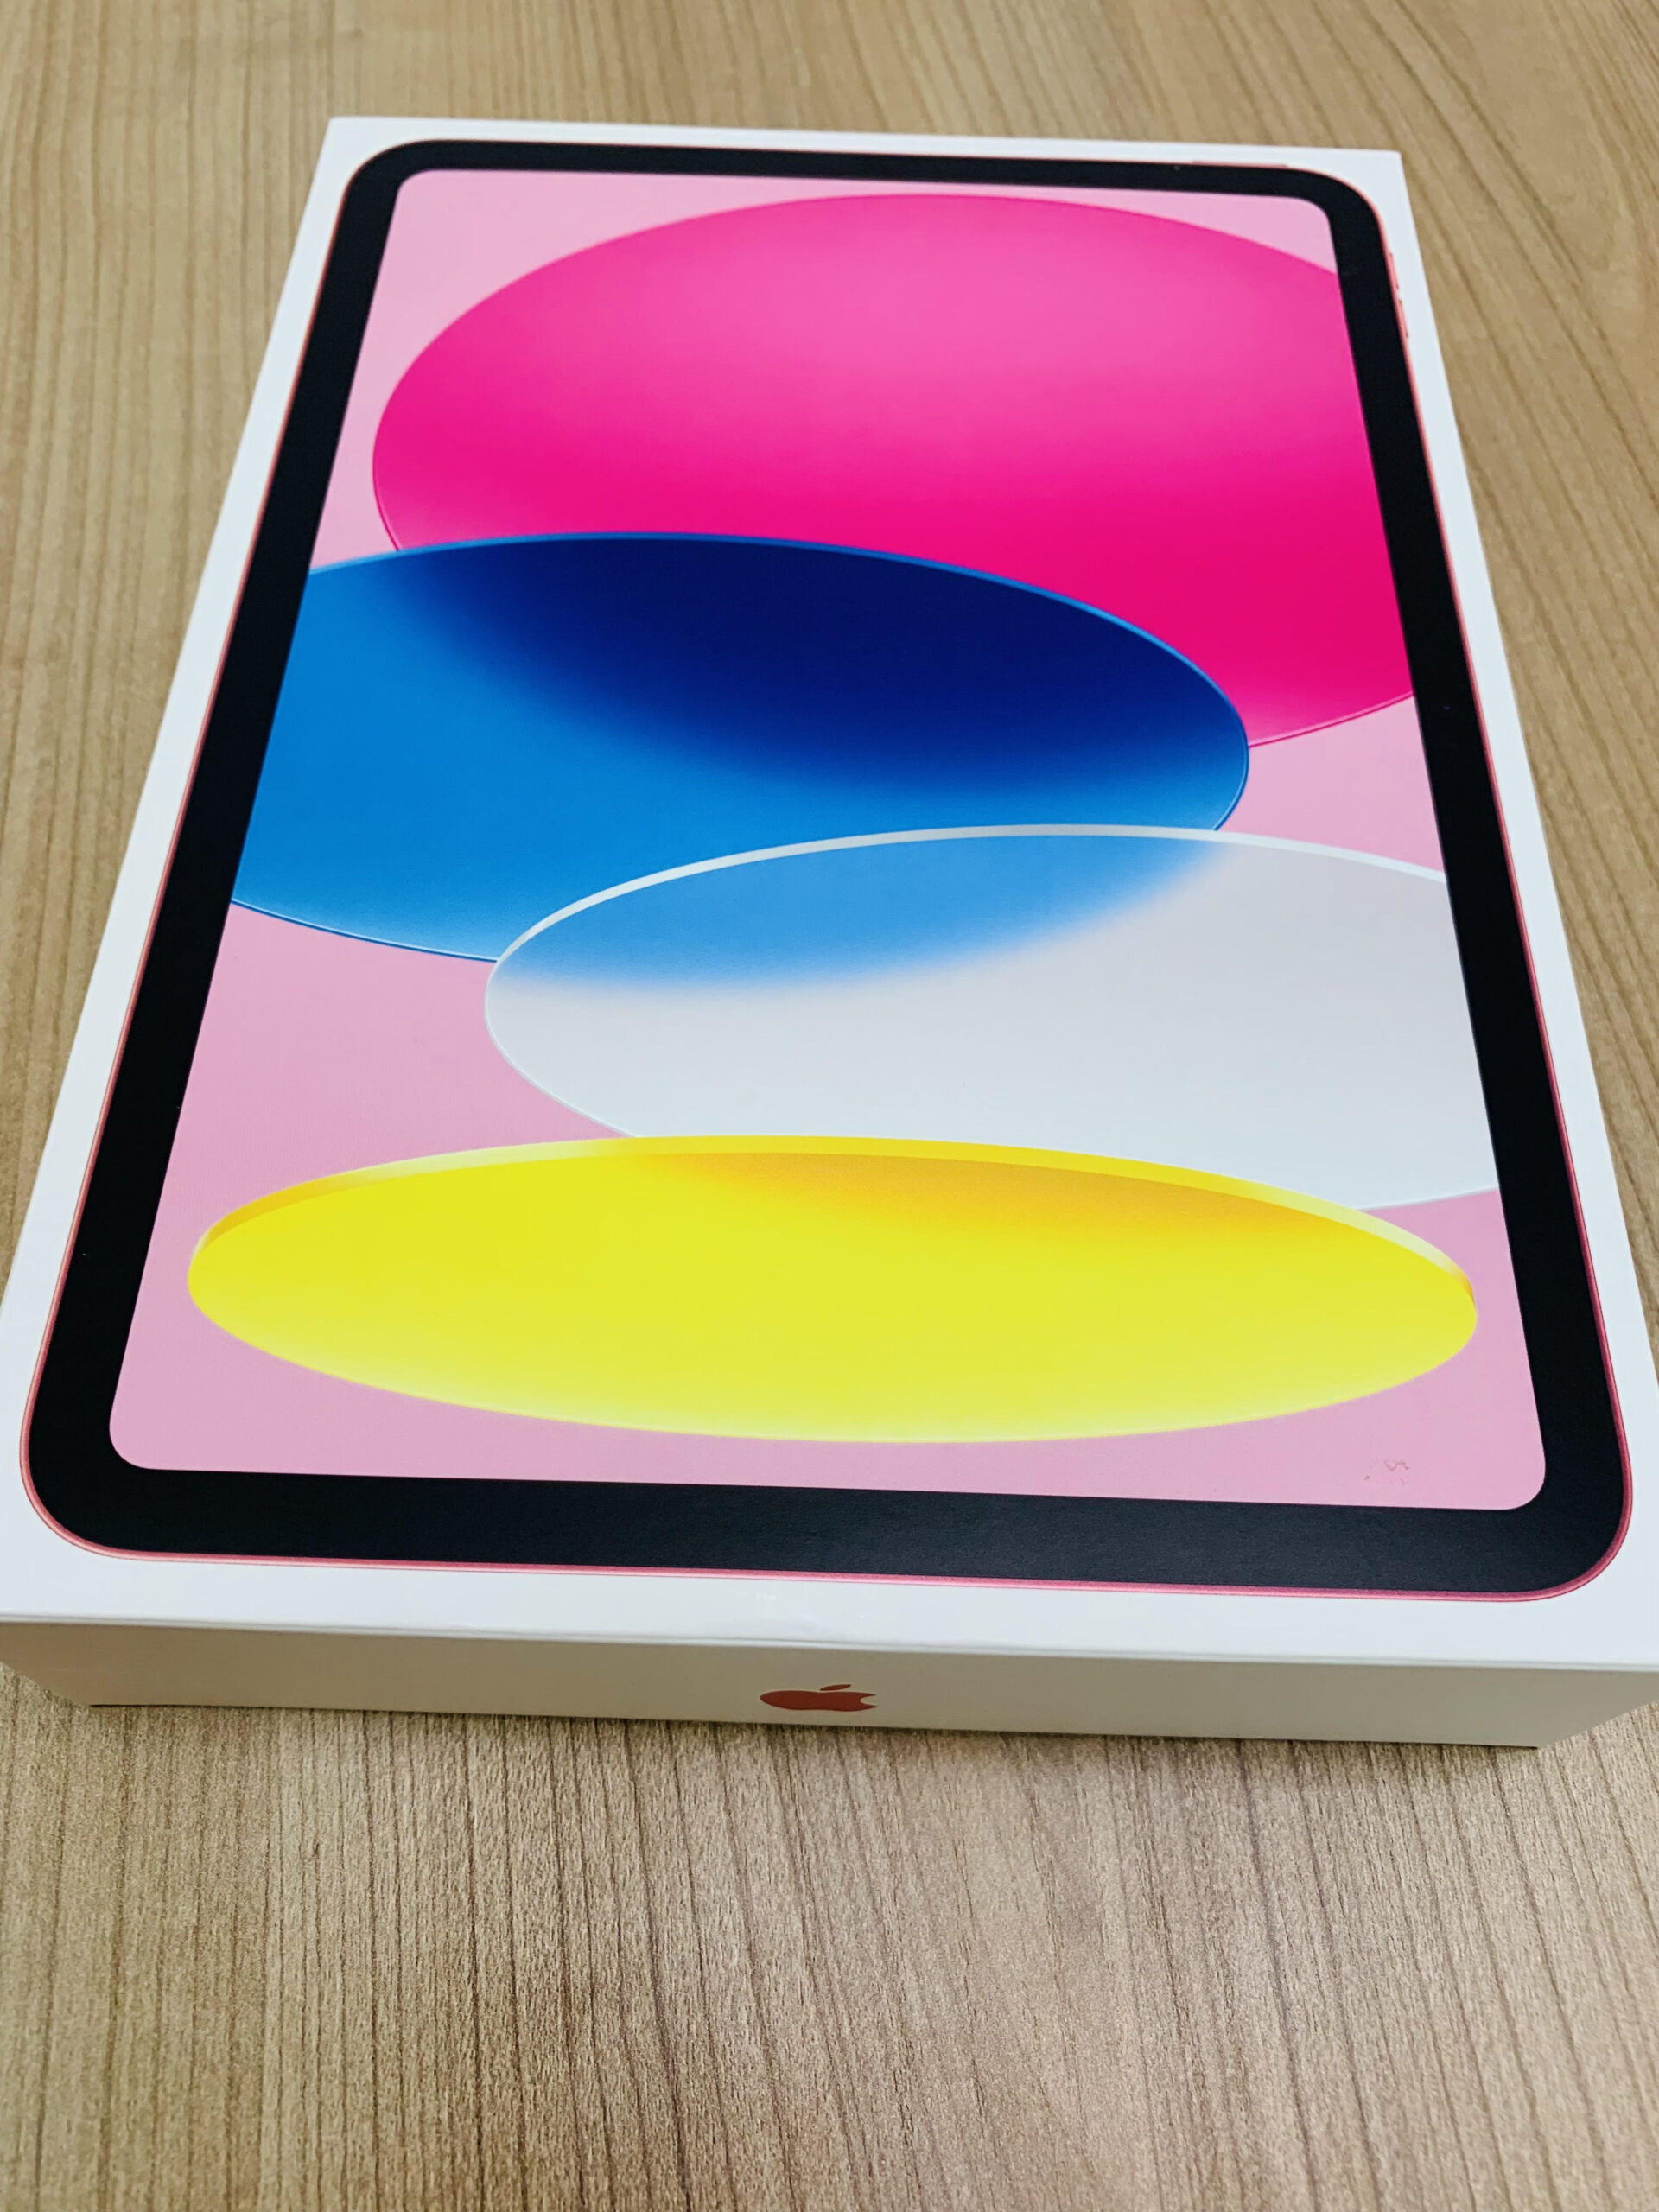 iPad(第10世代)Wifiモデル 64GB ピンク 未開封品 【所沢店】